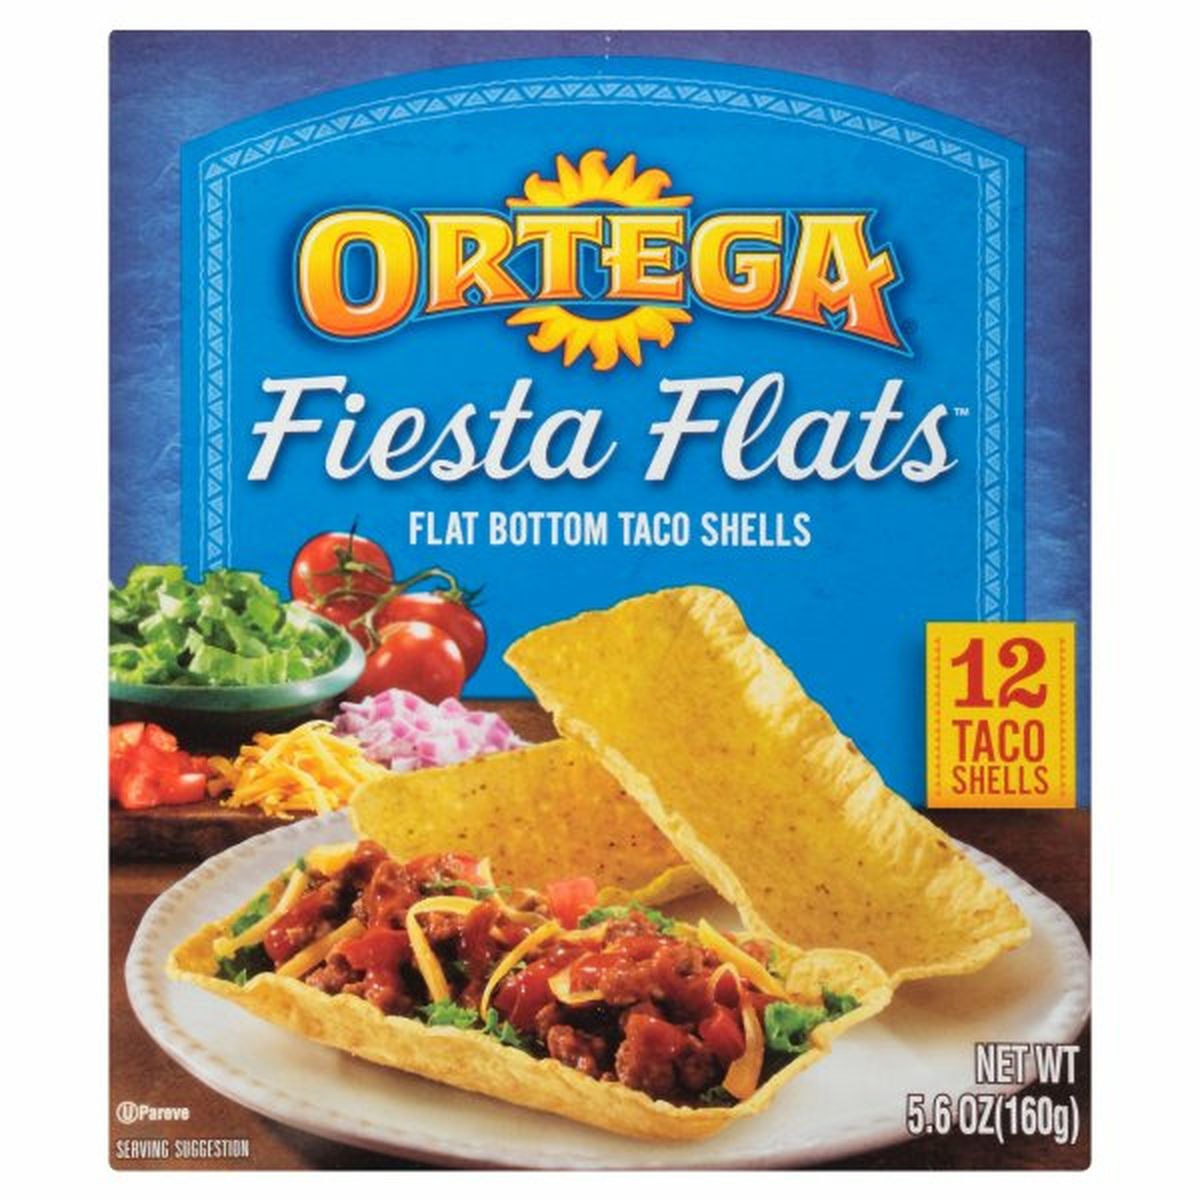 Calories in Ortega Fiesta Flats Taco Shells, Flat Bottom